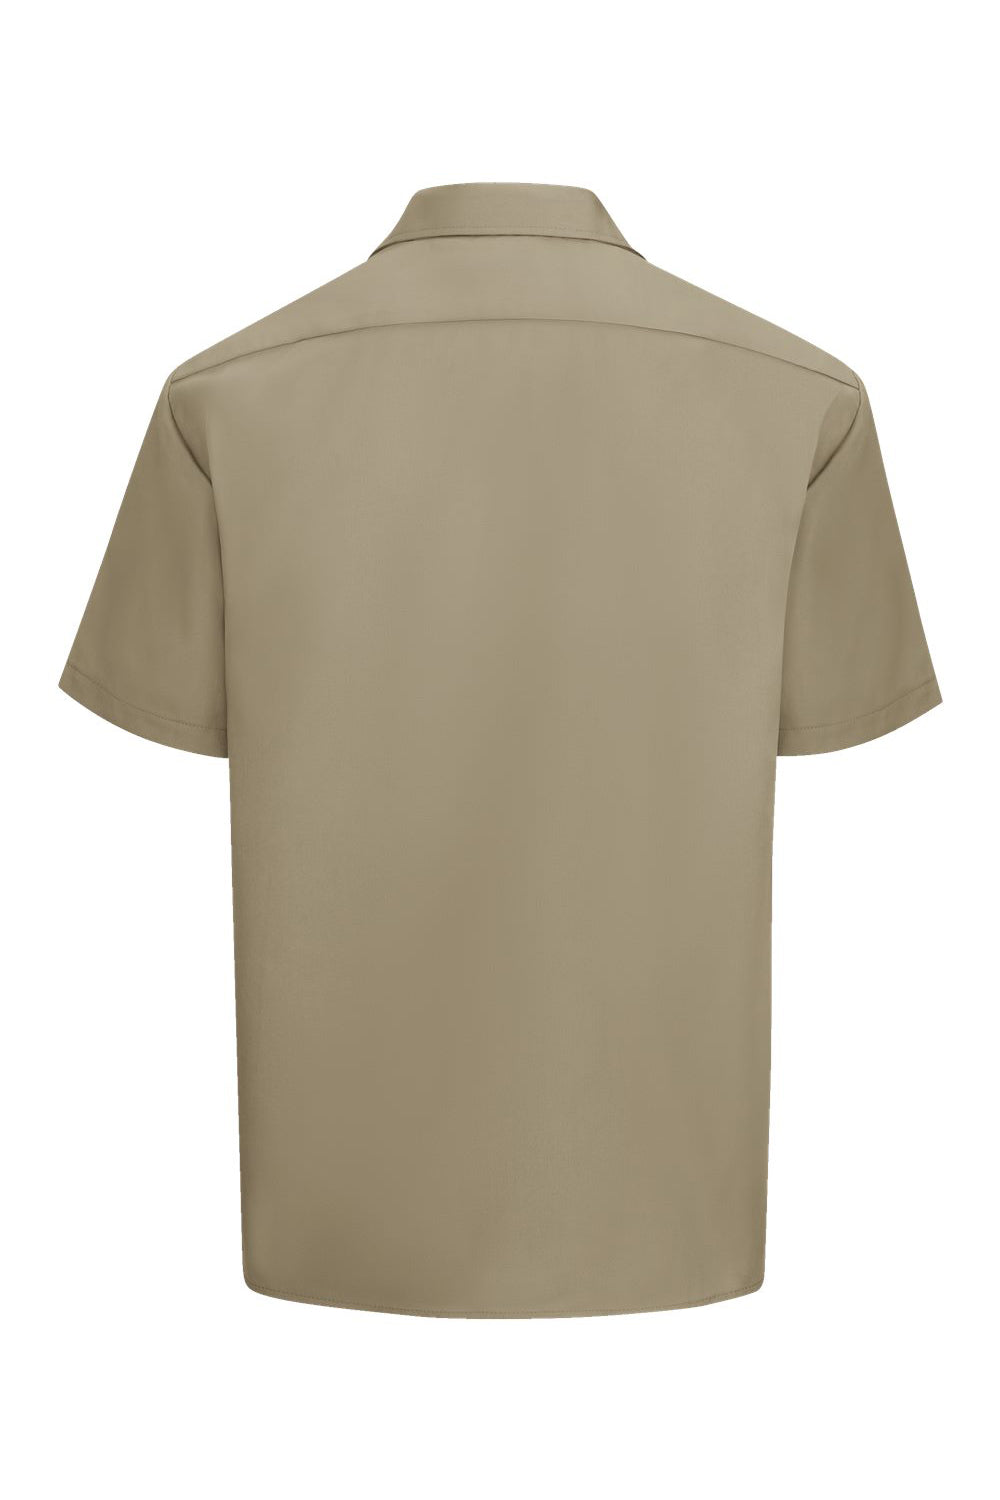 Dickies 2574 Mens Moisture Wicking Short Sleeve Button Down Work Shirt w/ Double Pockets Khaki Flat Back